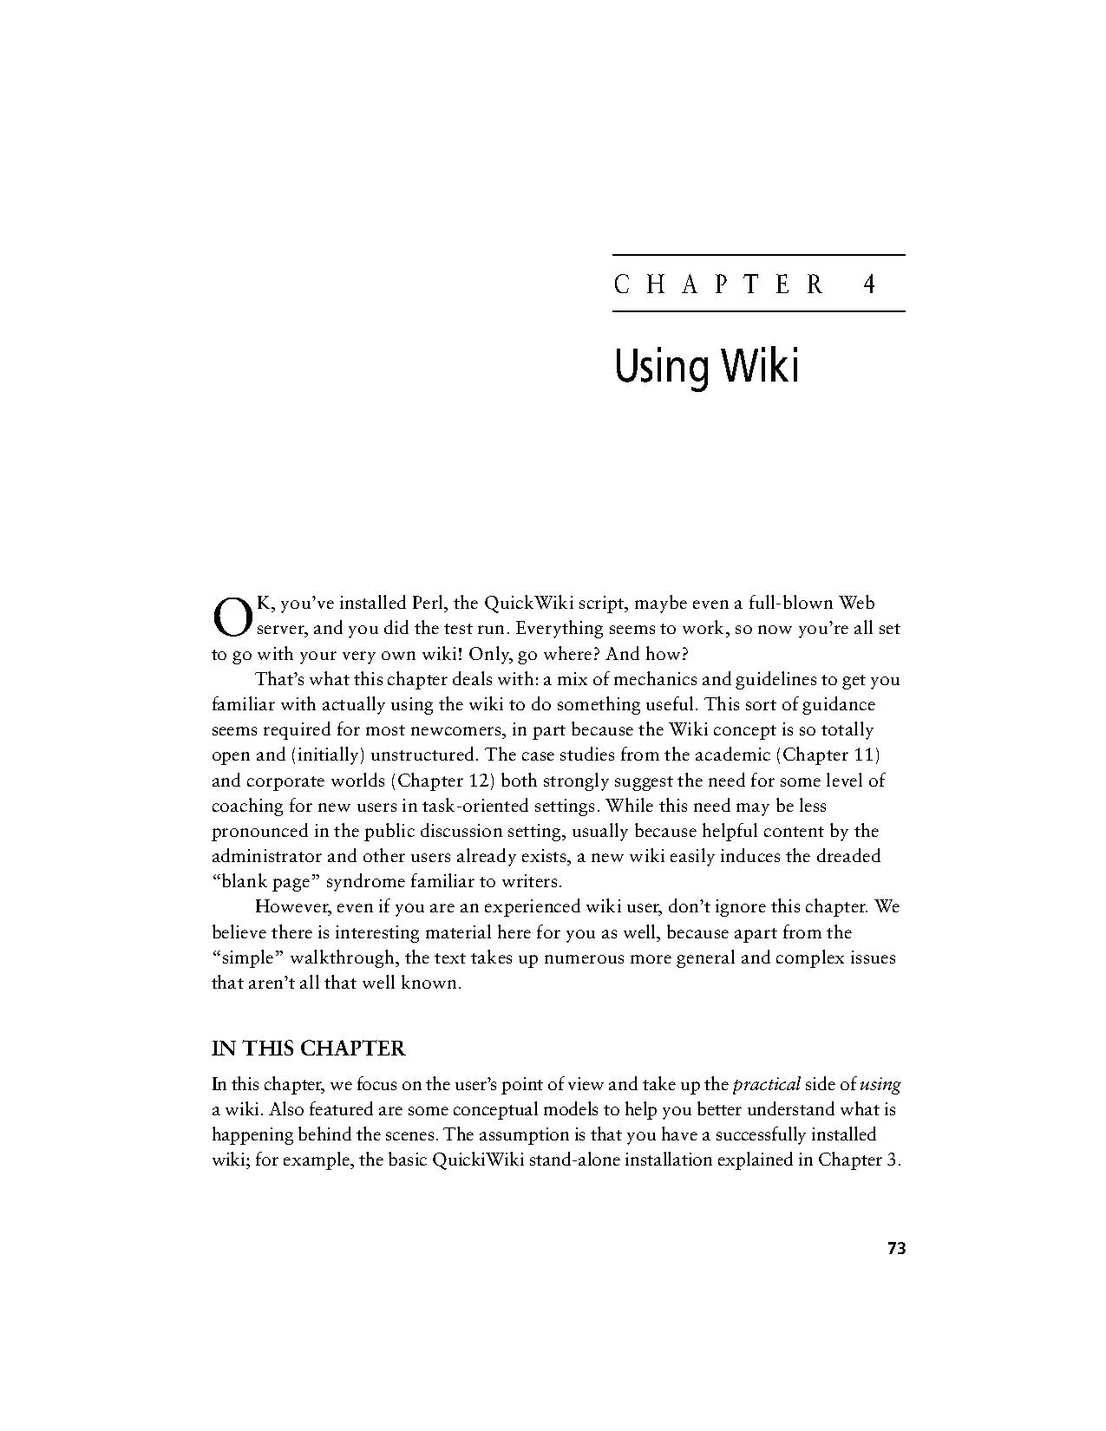 WikiWay 04.pdf